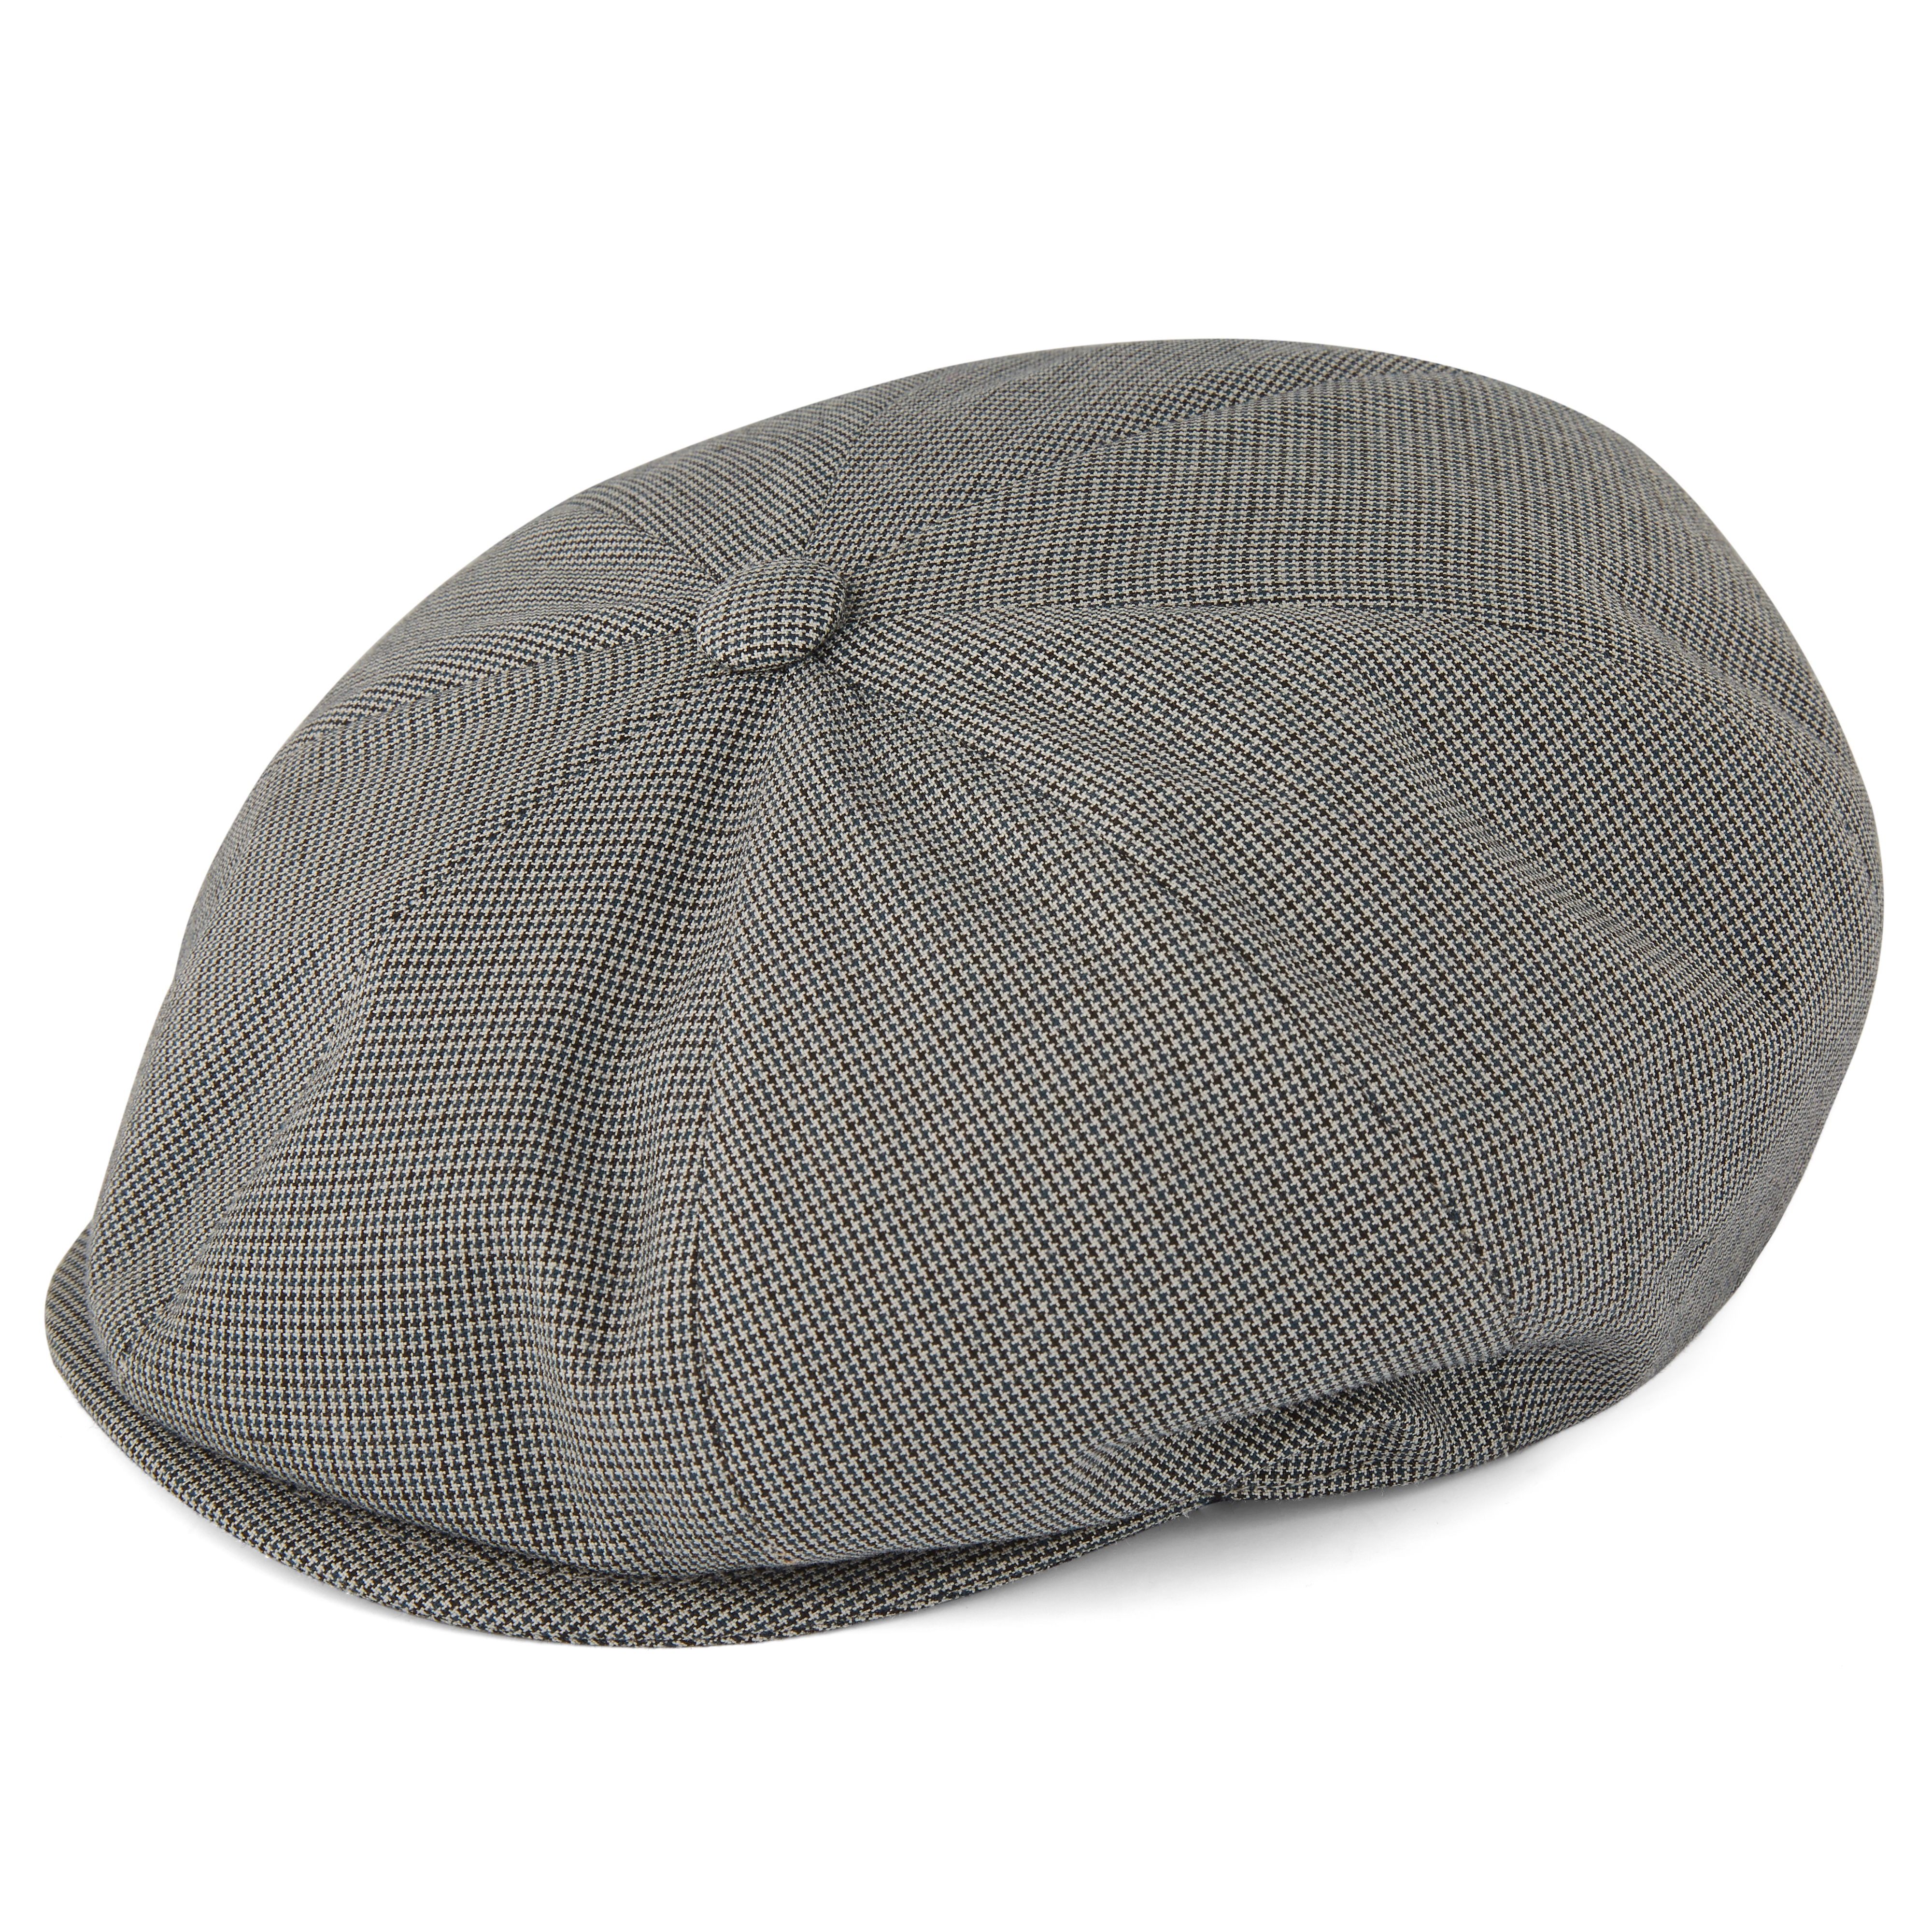 A flattering hat: a history of the Flat Cap 